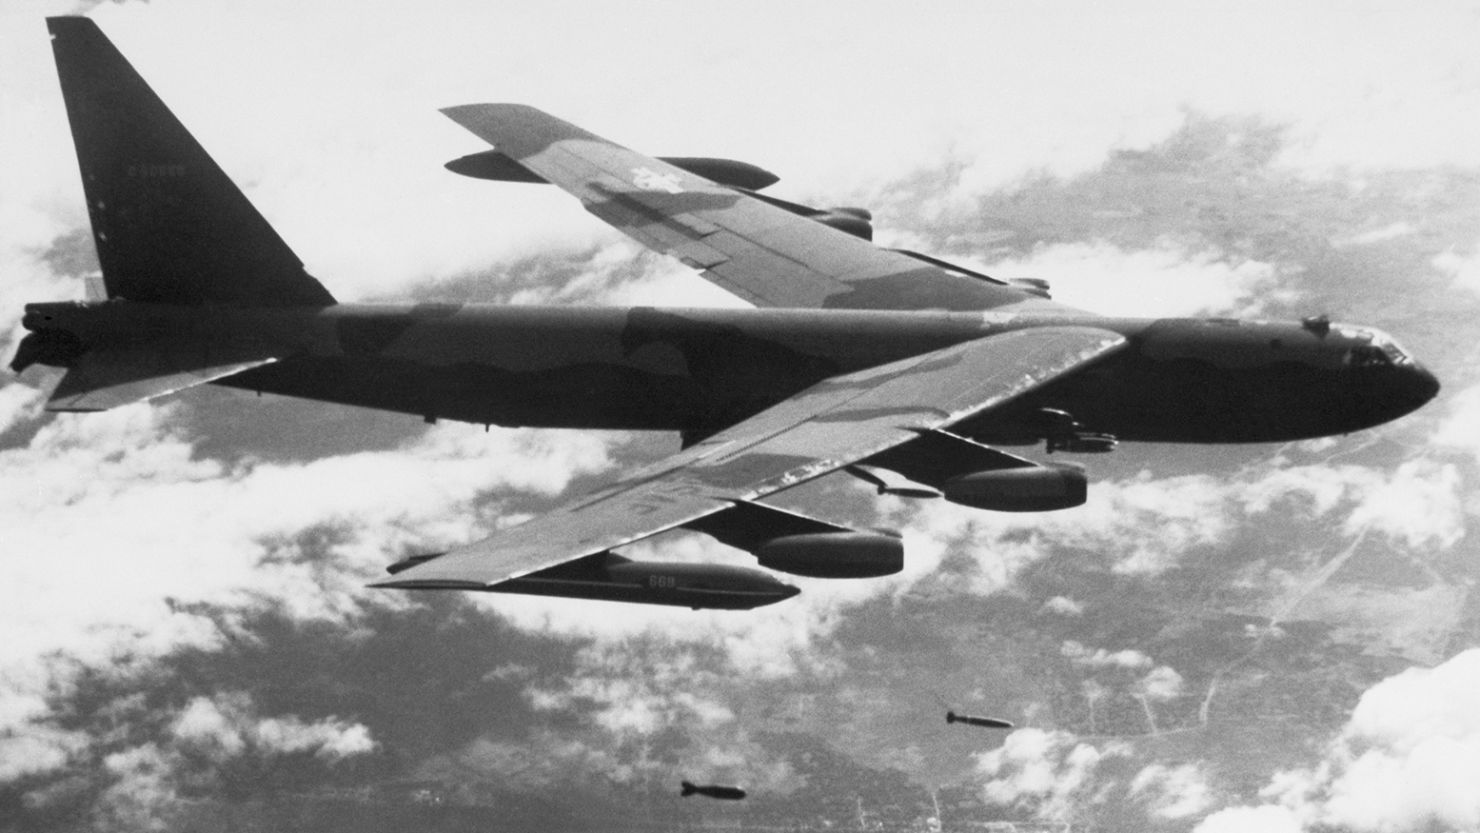 A US B-52 bomber flies over Southeast Asia during the Vietnam War.